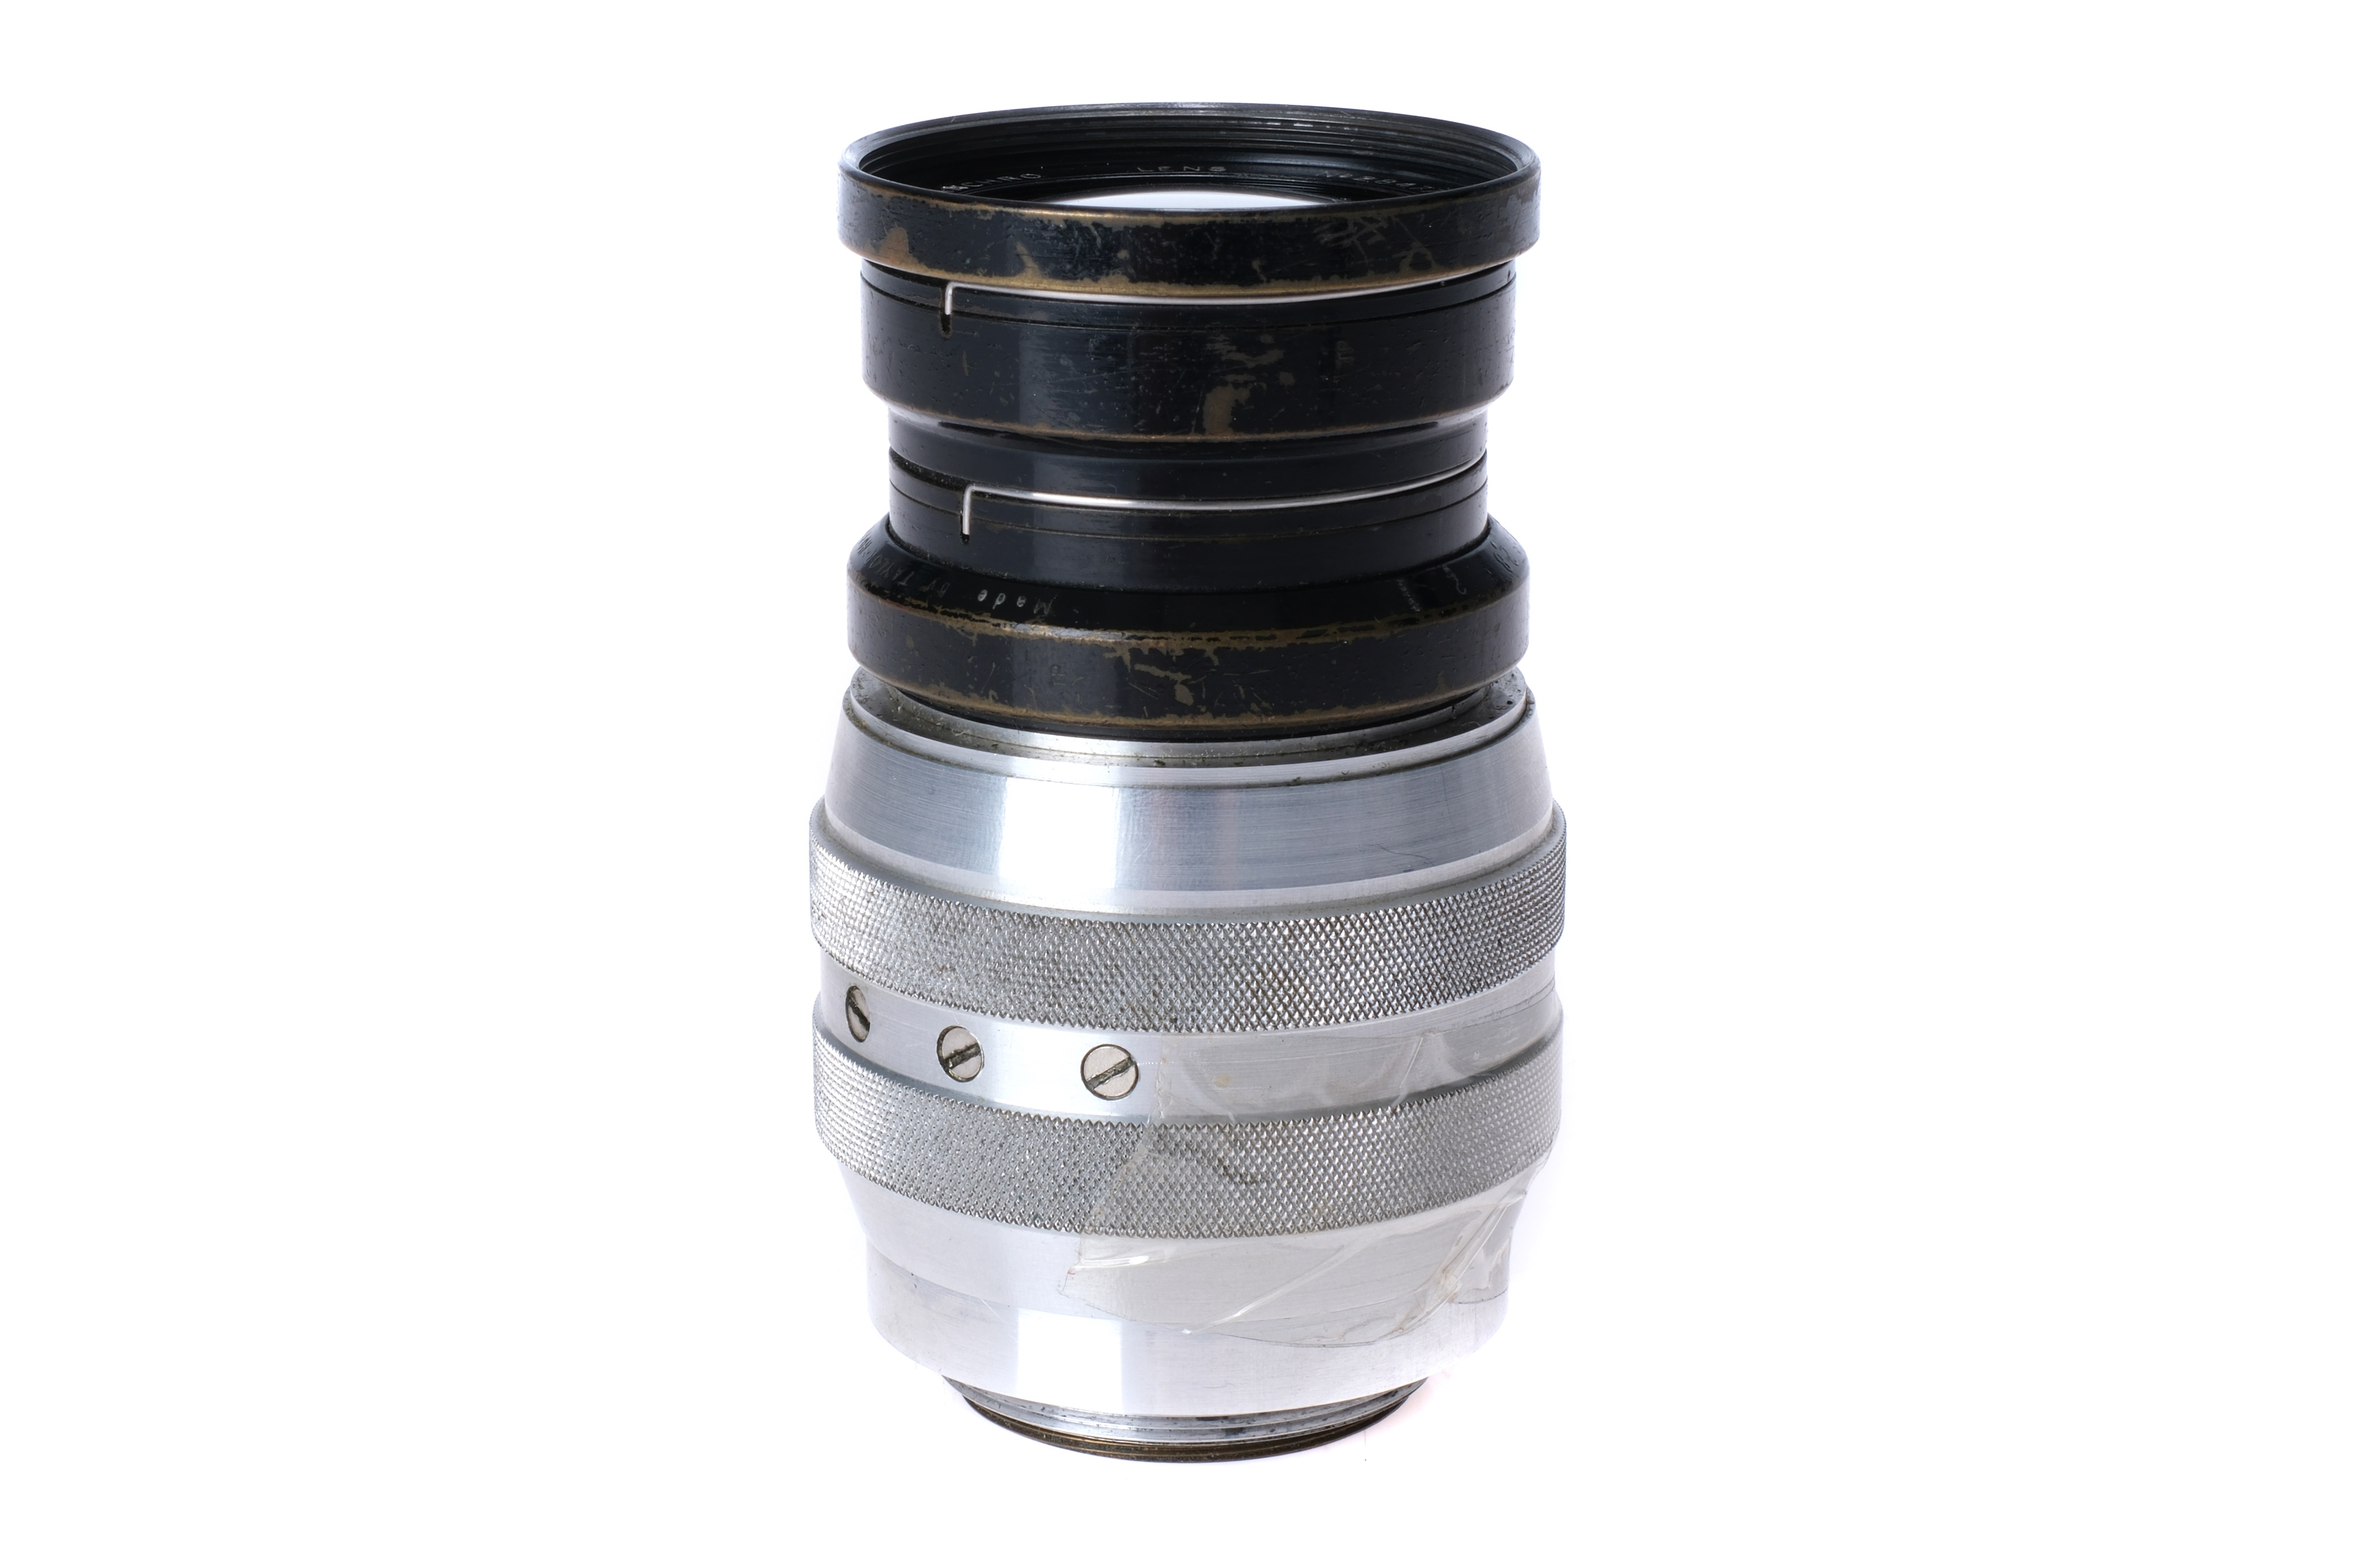 A Cooke Speed Panchro f/2 75mm Lens,